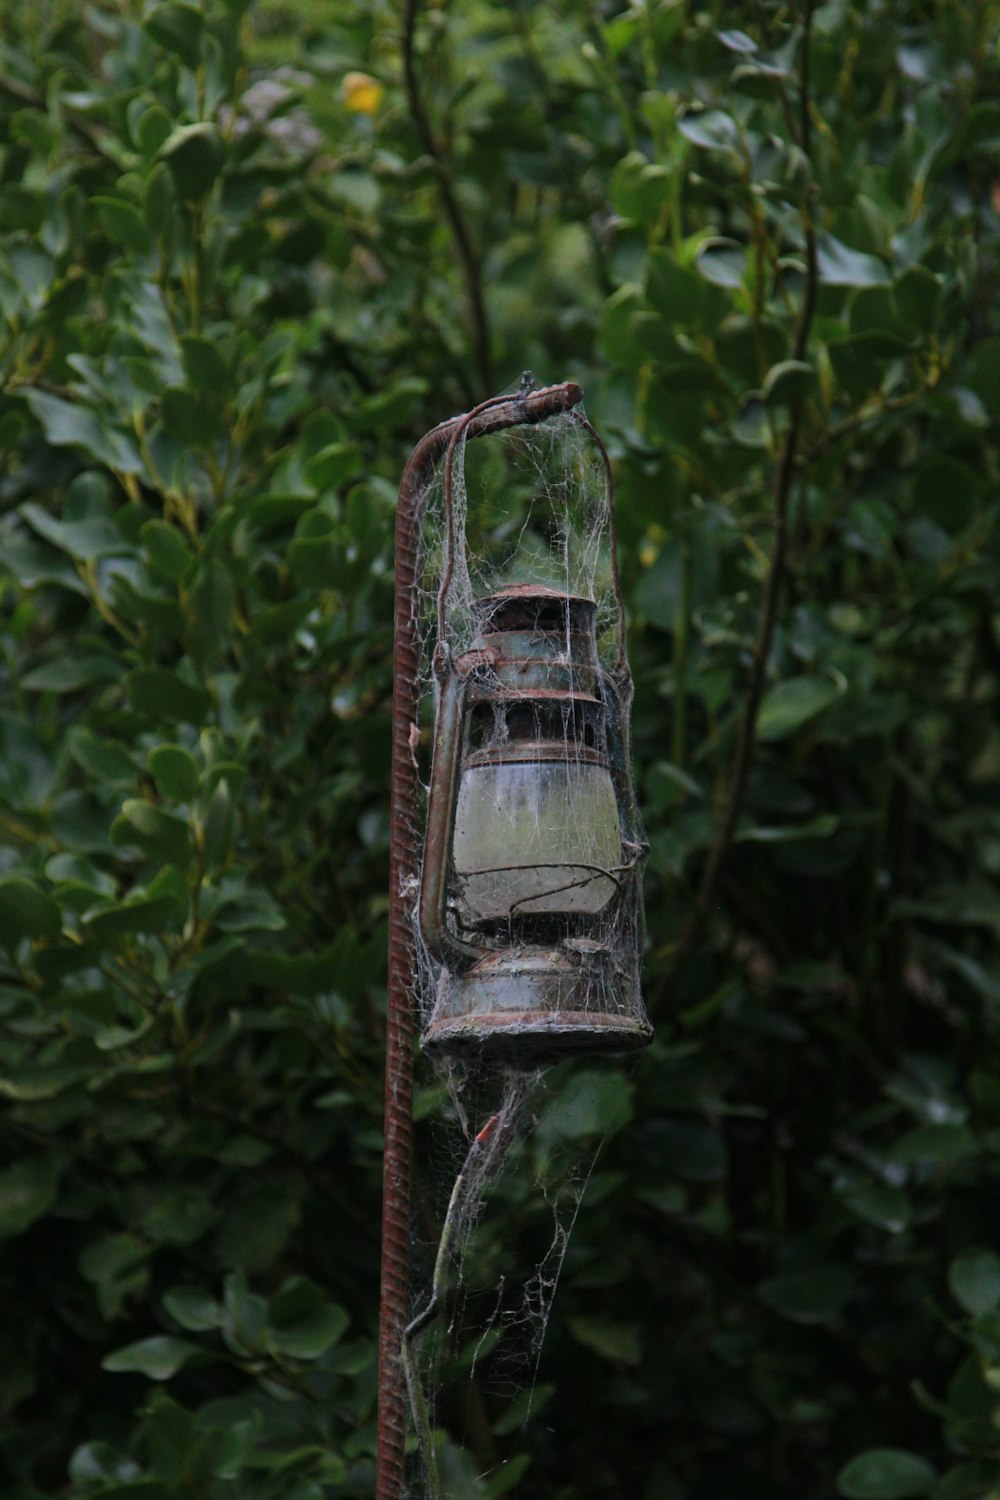 brown metal bird cage hanging on tree branch